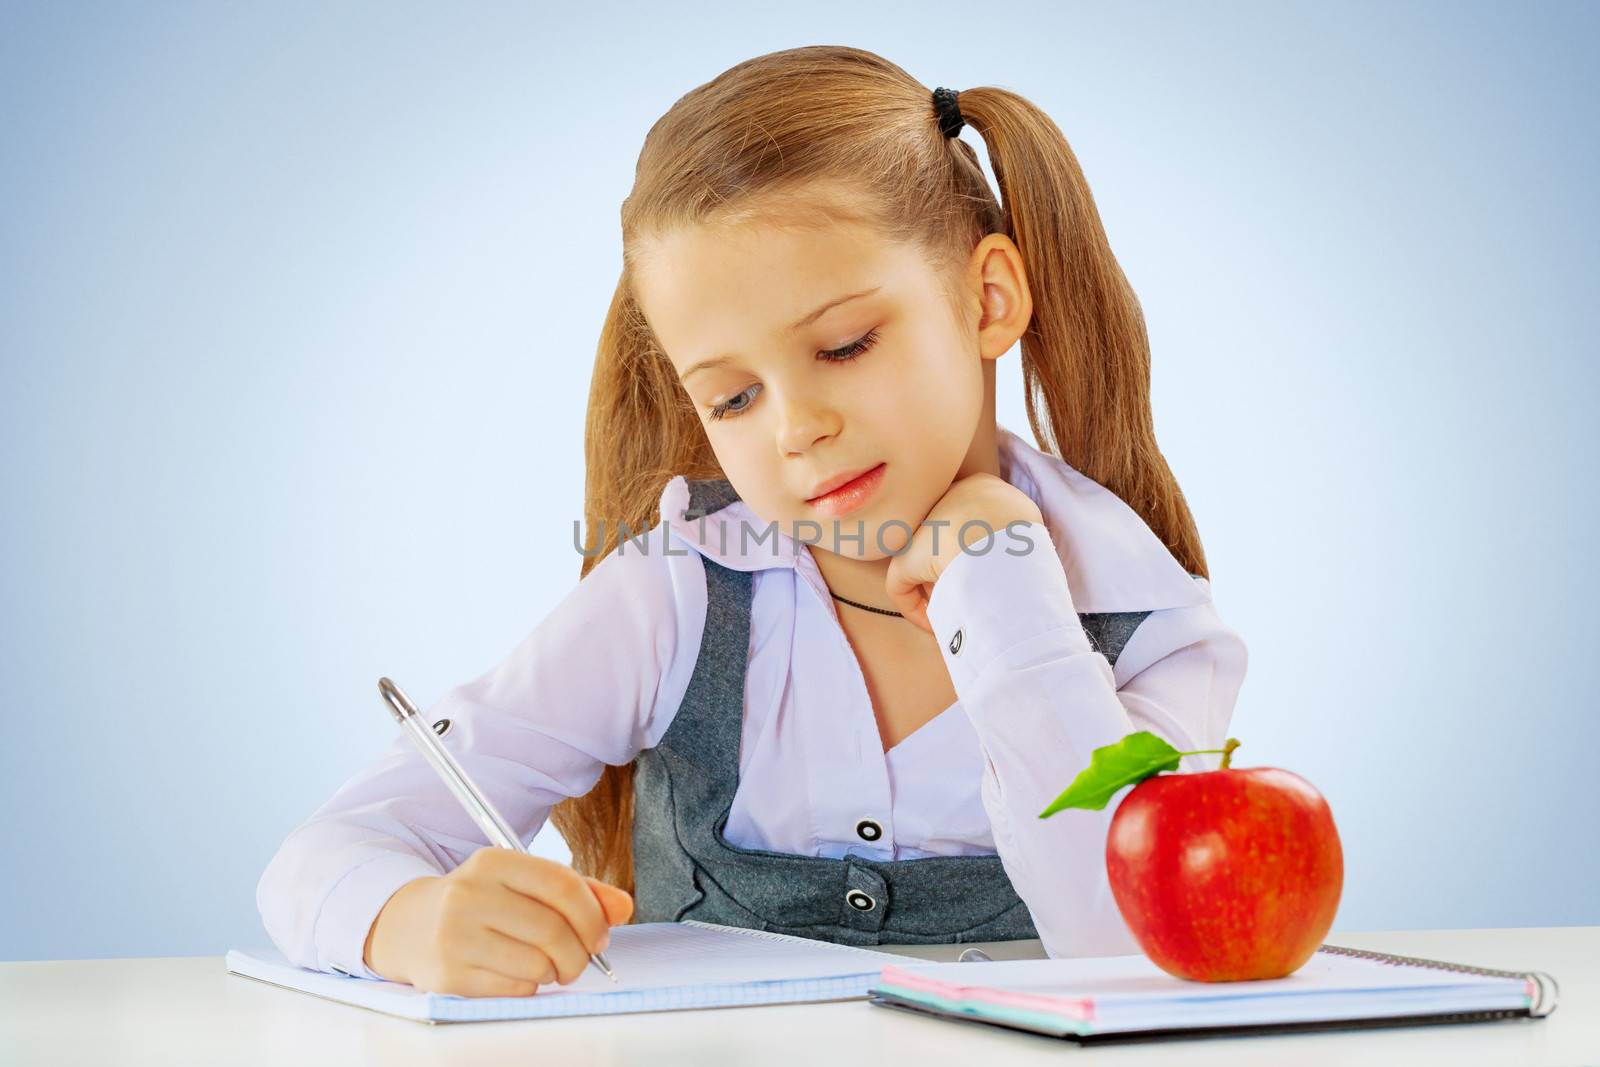 a litli schoolgirl writing